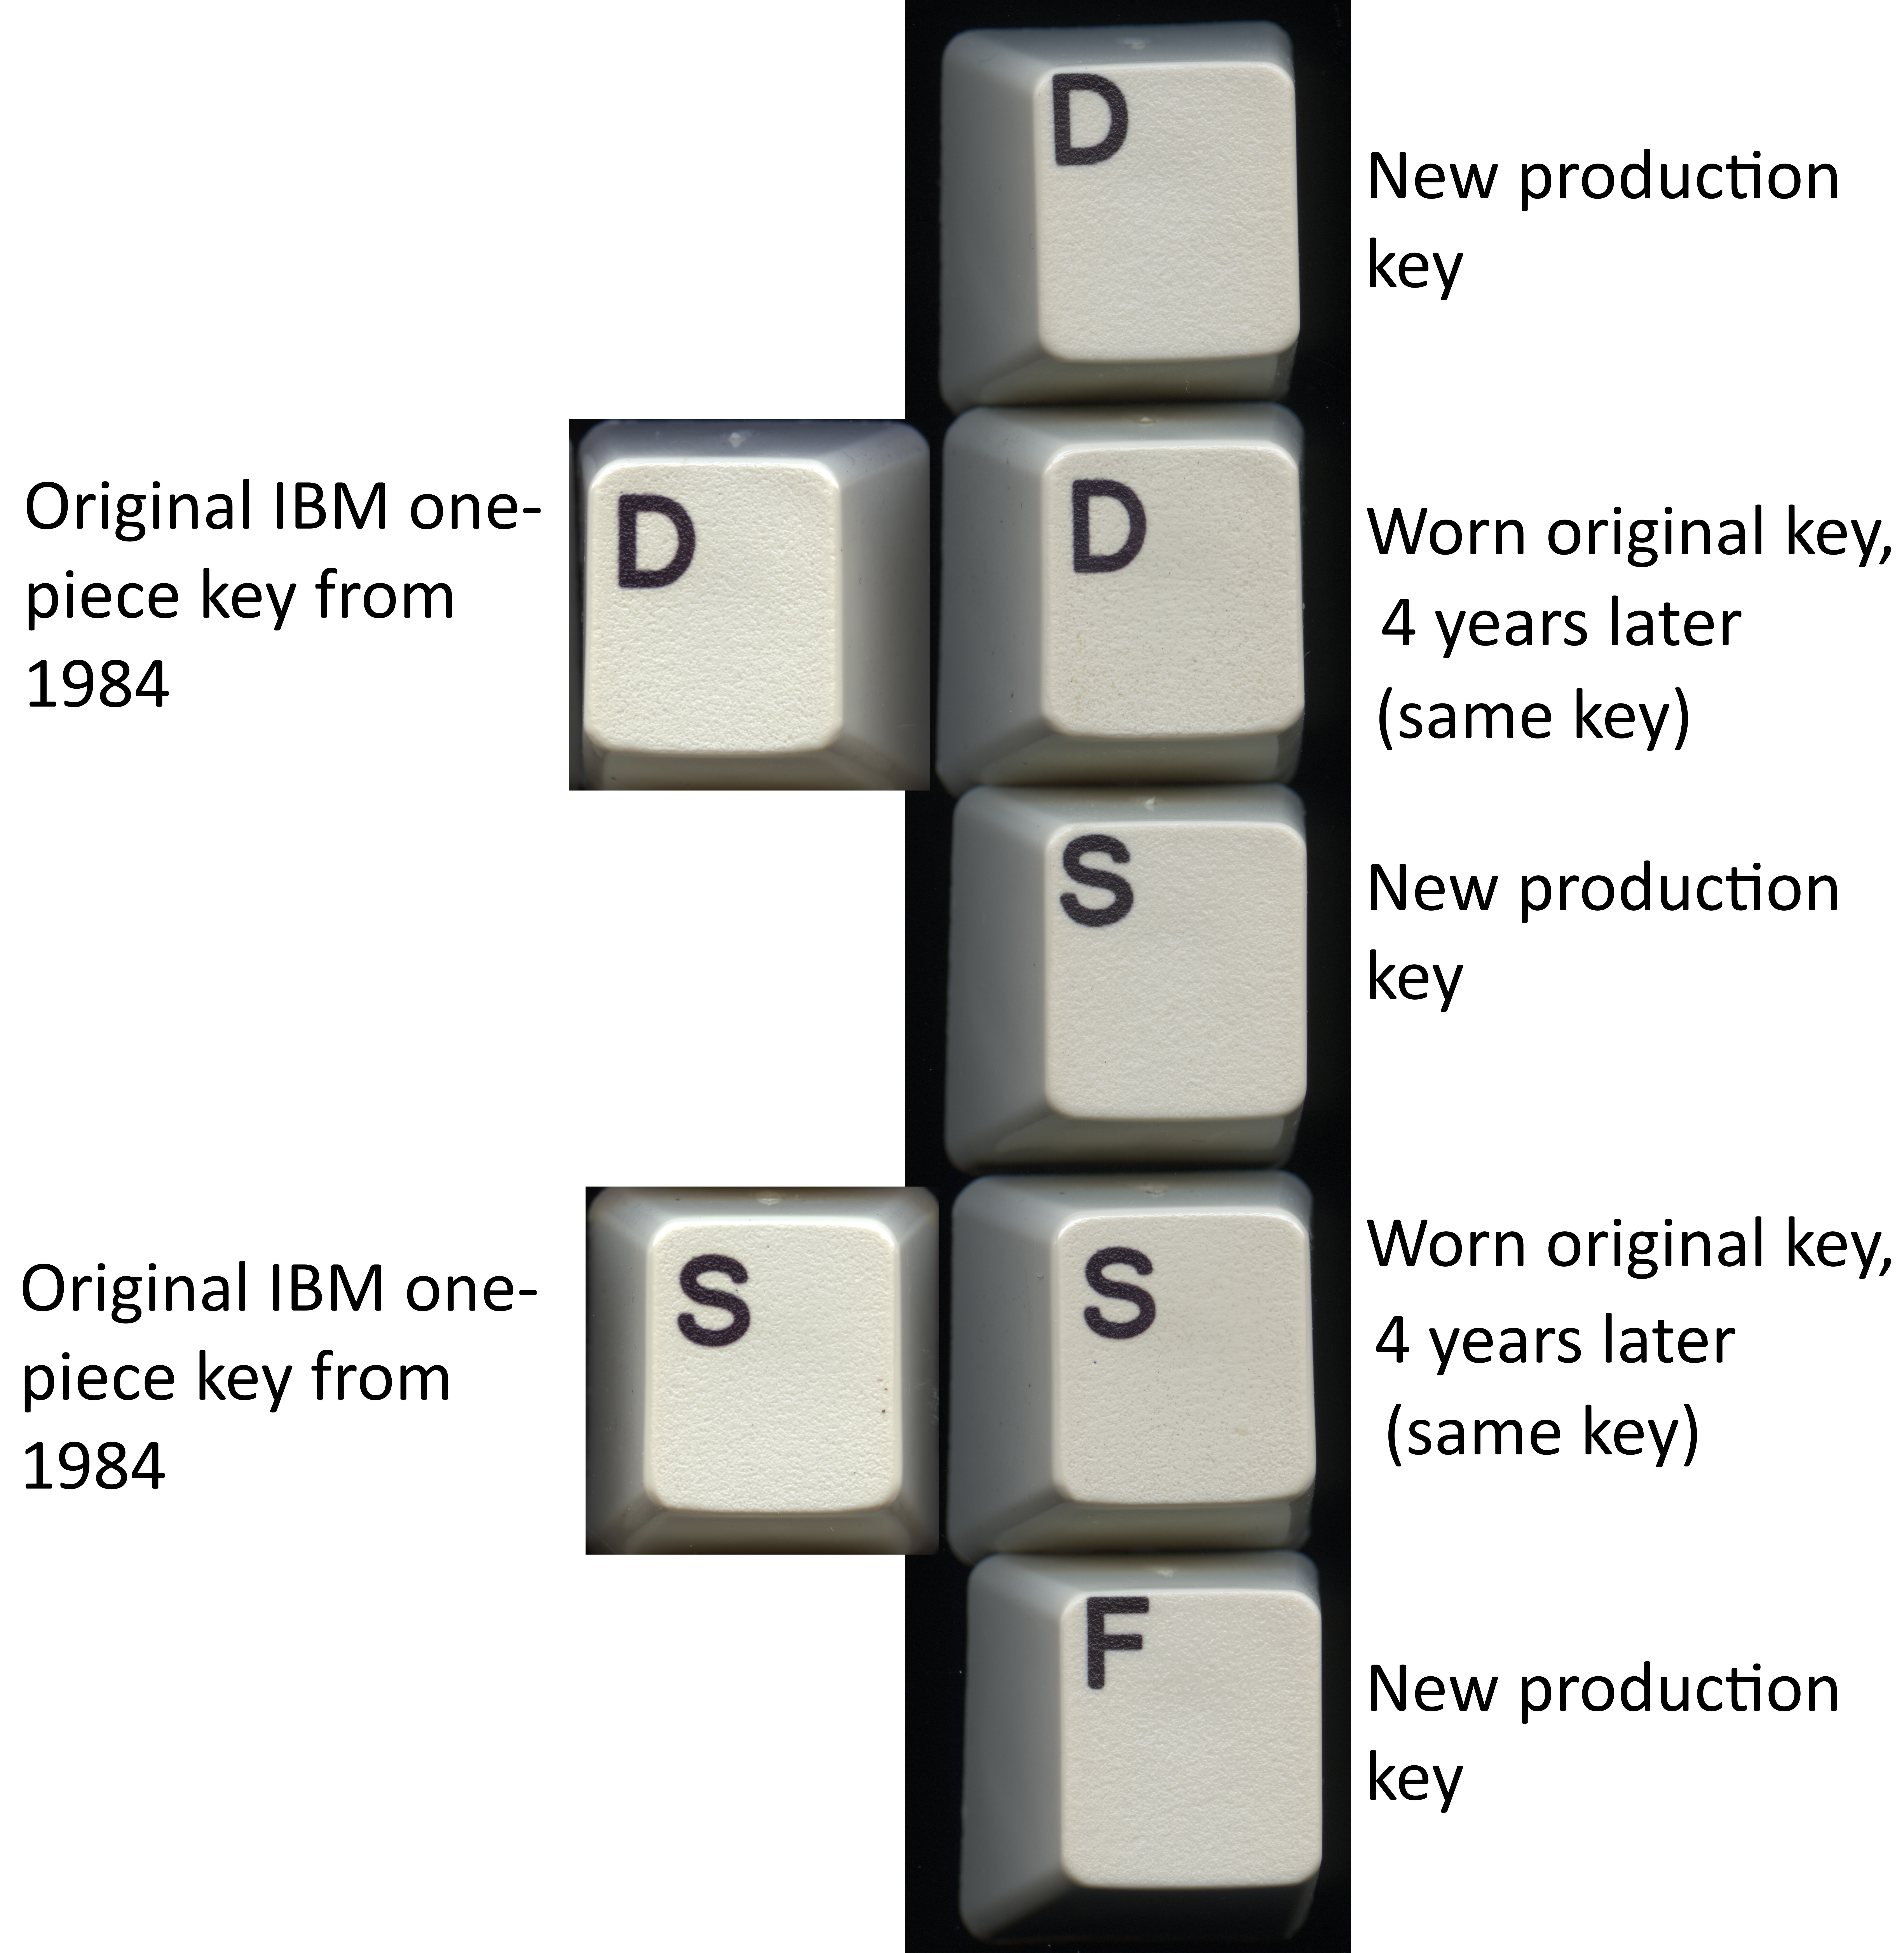 texture comparison - new production, original 6110344 Jun 1984 keys, same keys after 4 years.jpg